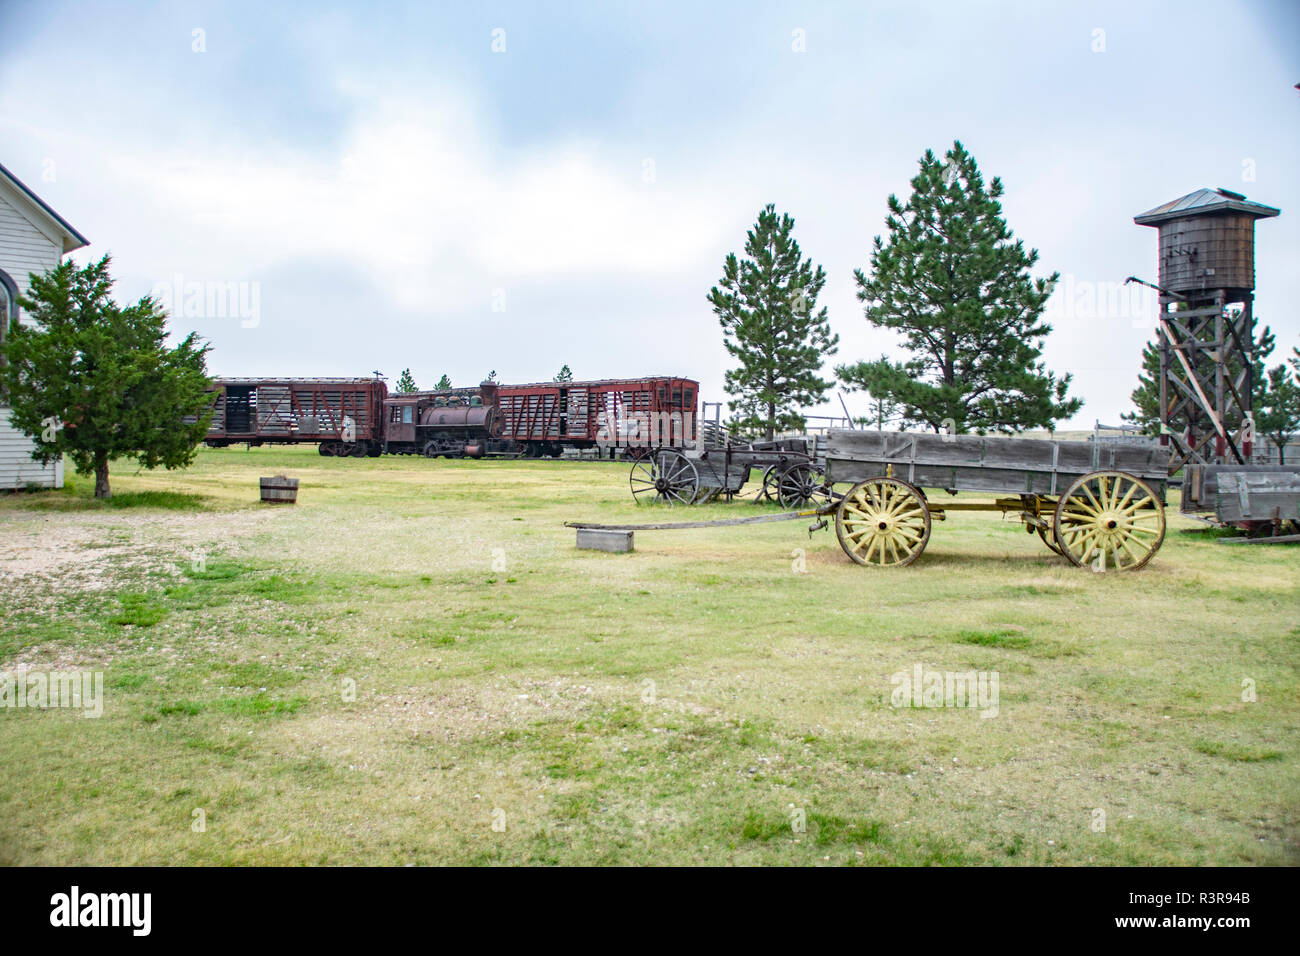 Train, wagon and silo in 1880 Town in Midland, South Dakota. Stock Photo